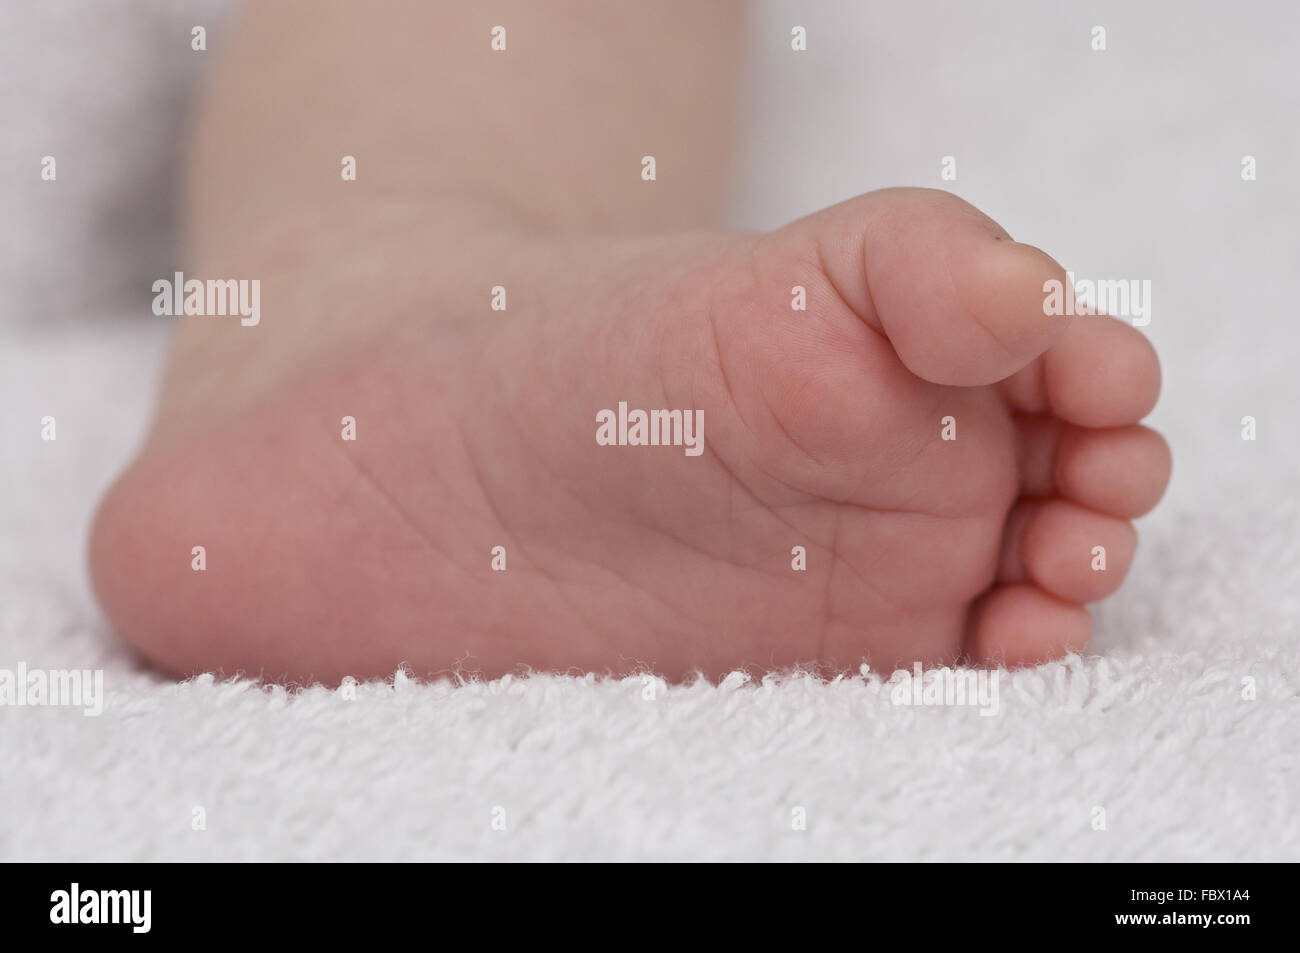 Foot of a Newborn Child Stock Photo